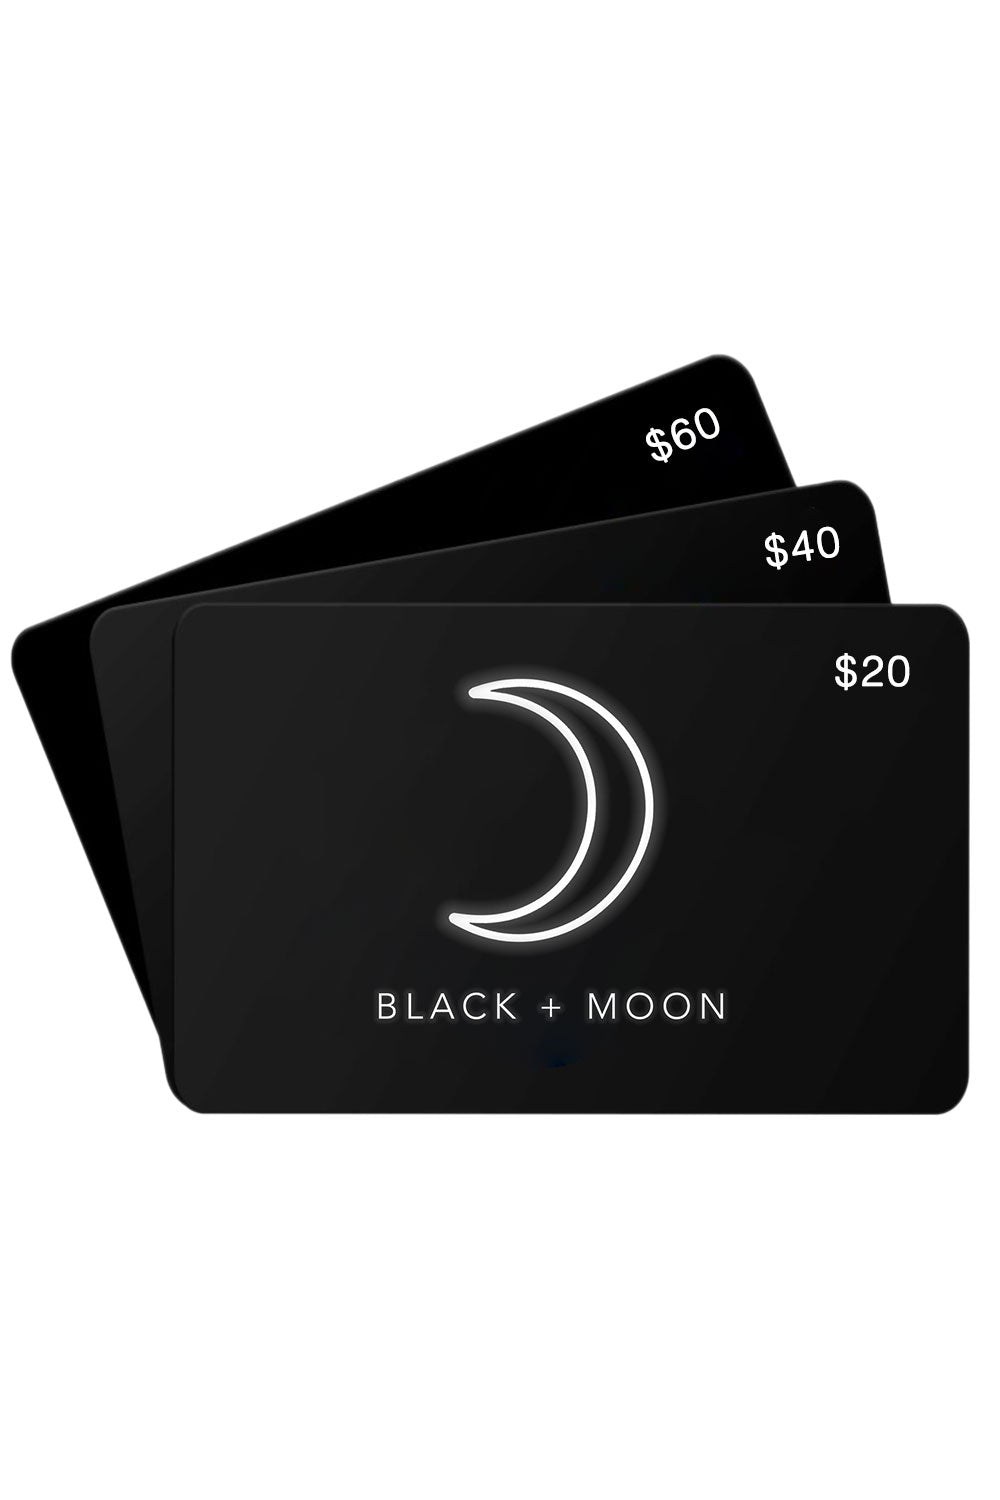 BLACK + MOON GIFT CARD